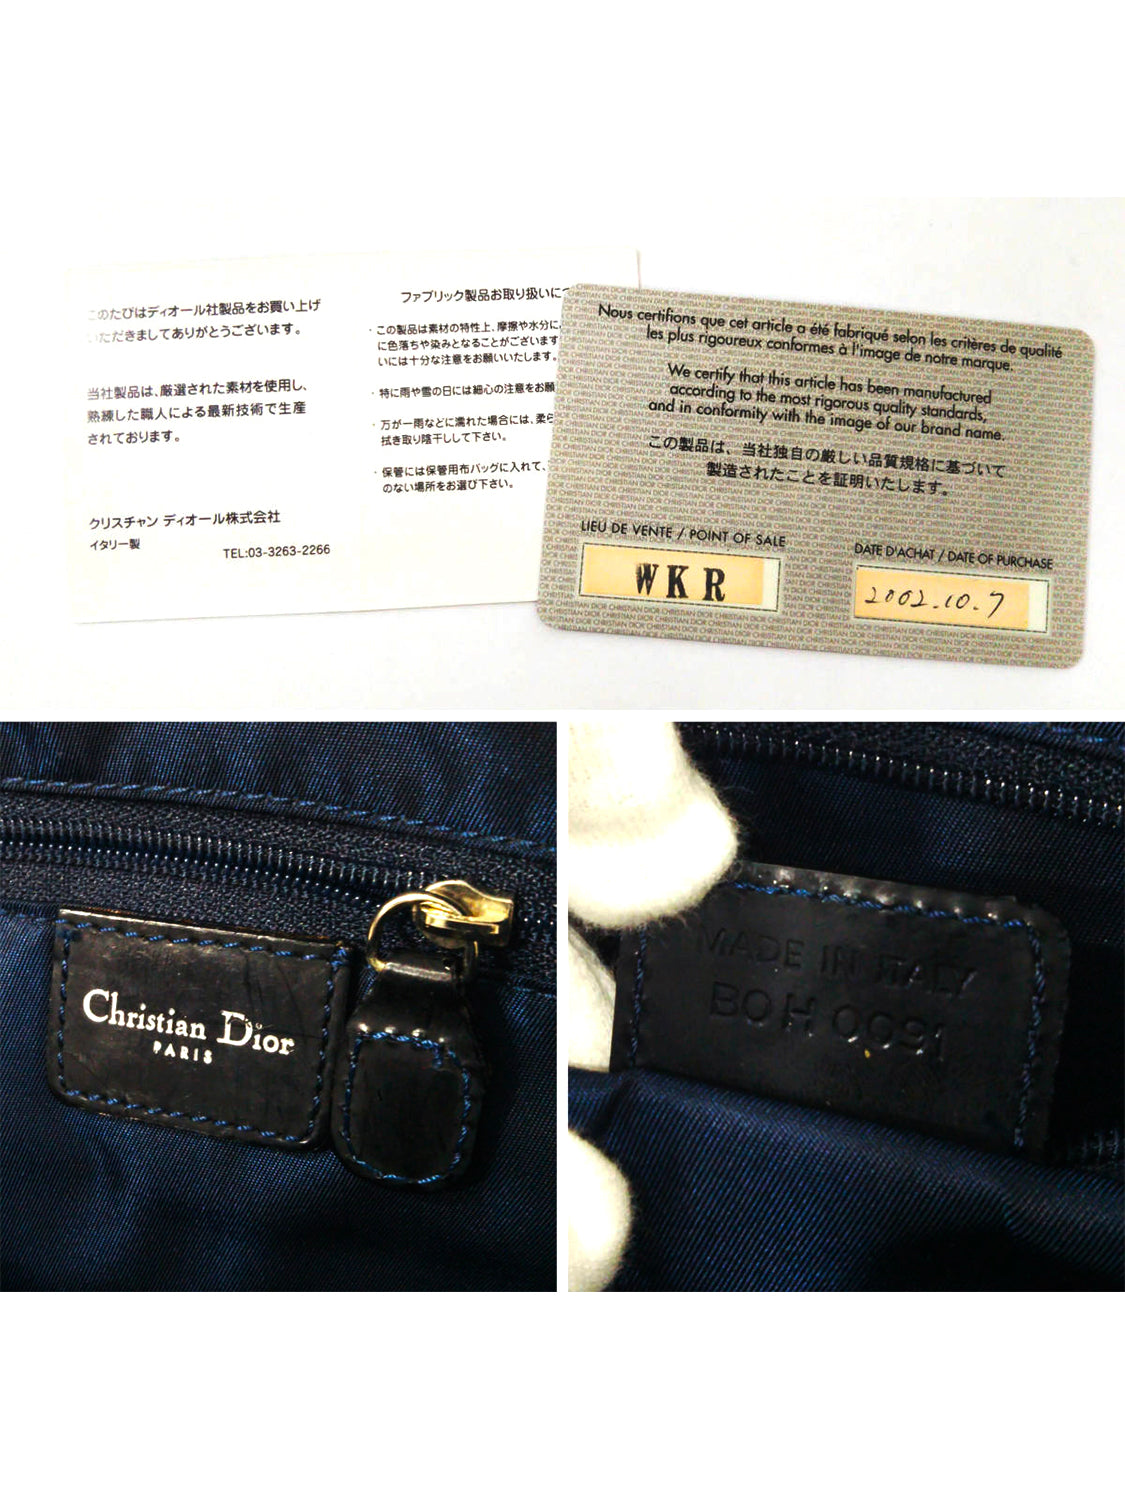 Dior Vintage - Denim Mini Saddle Bag - Blue - Leather and Canvas